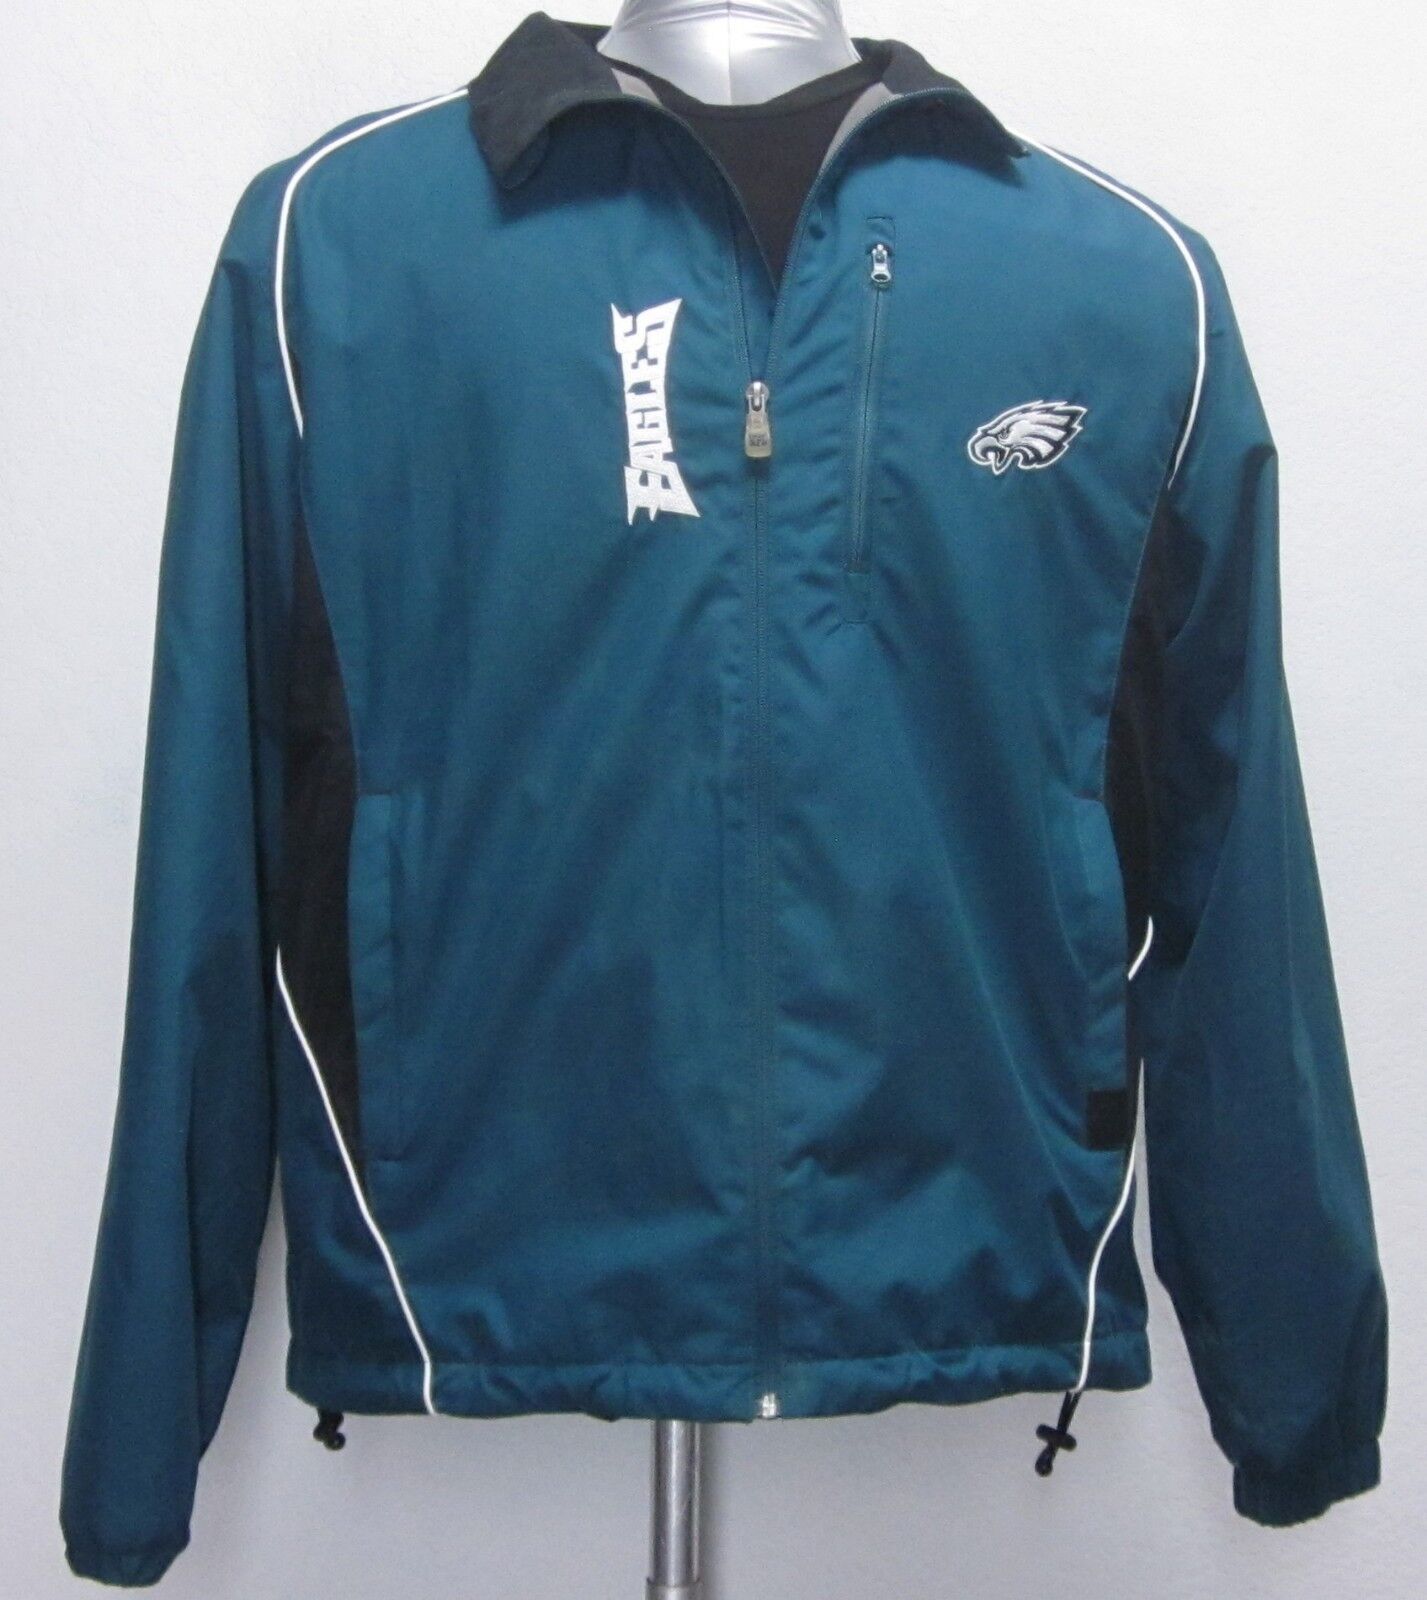 Primary image for Men's Large PHILADELPHIA EAGLES NFL Team Apparel Zippered Polyester Jacket SEWN